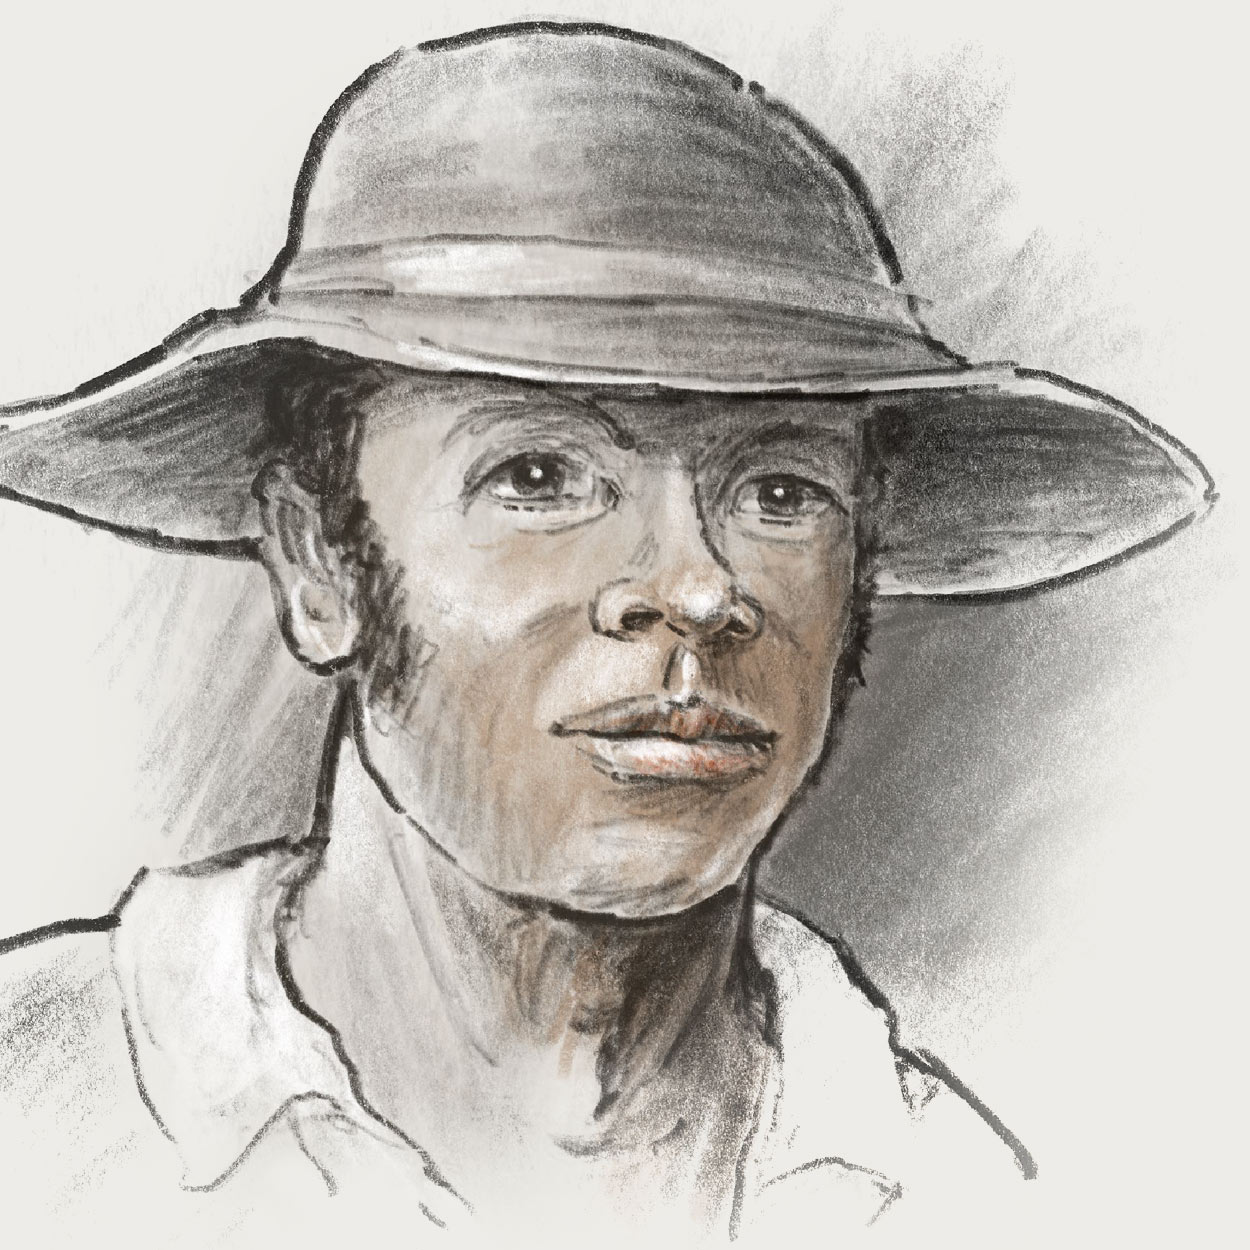 Drawn portrait of Harry Washington